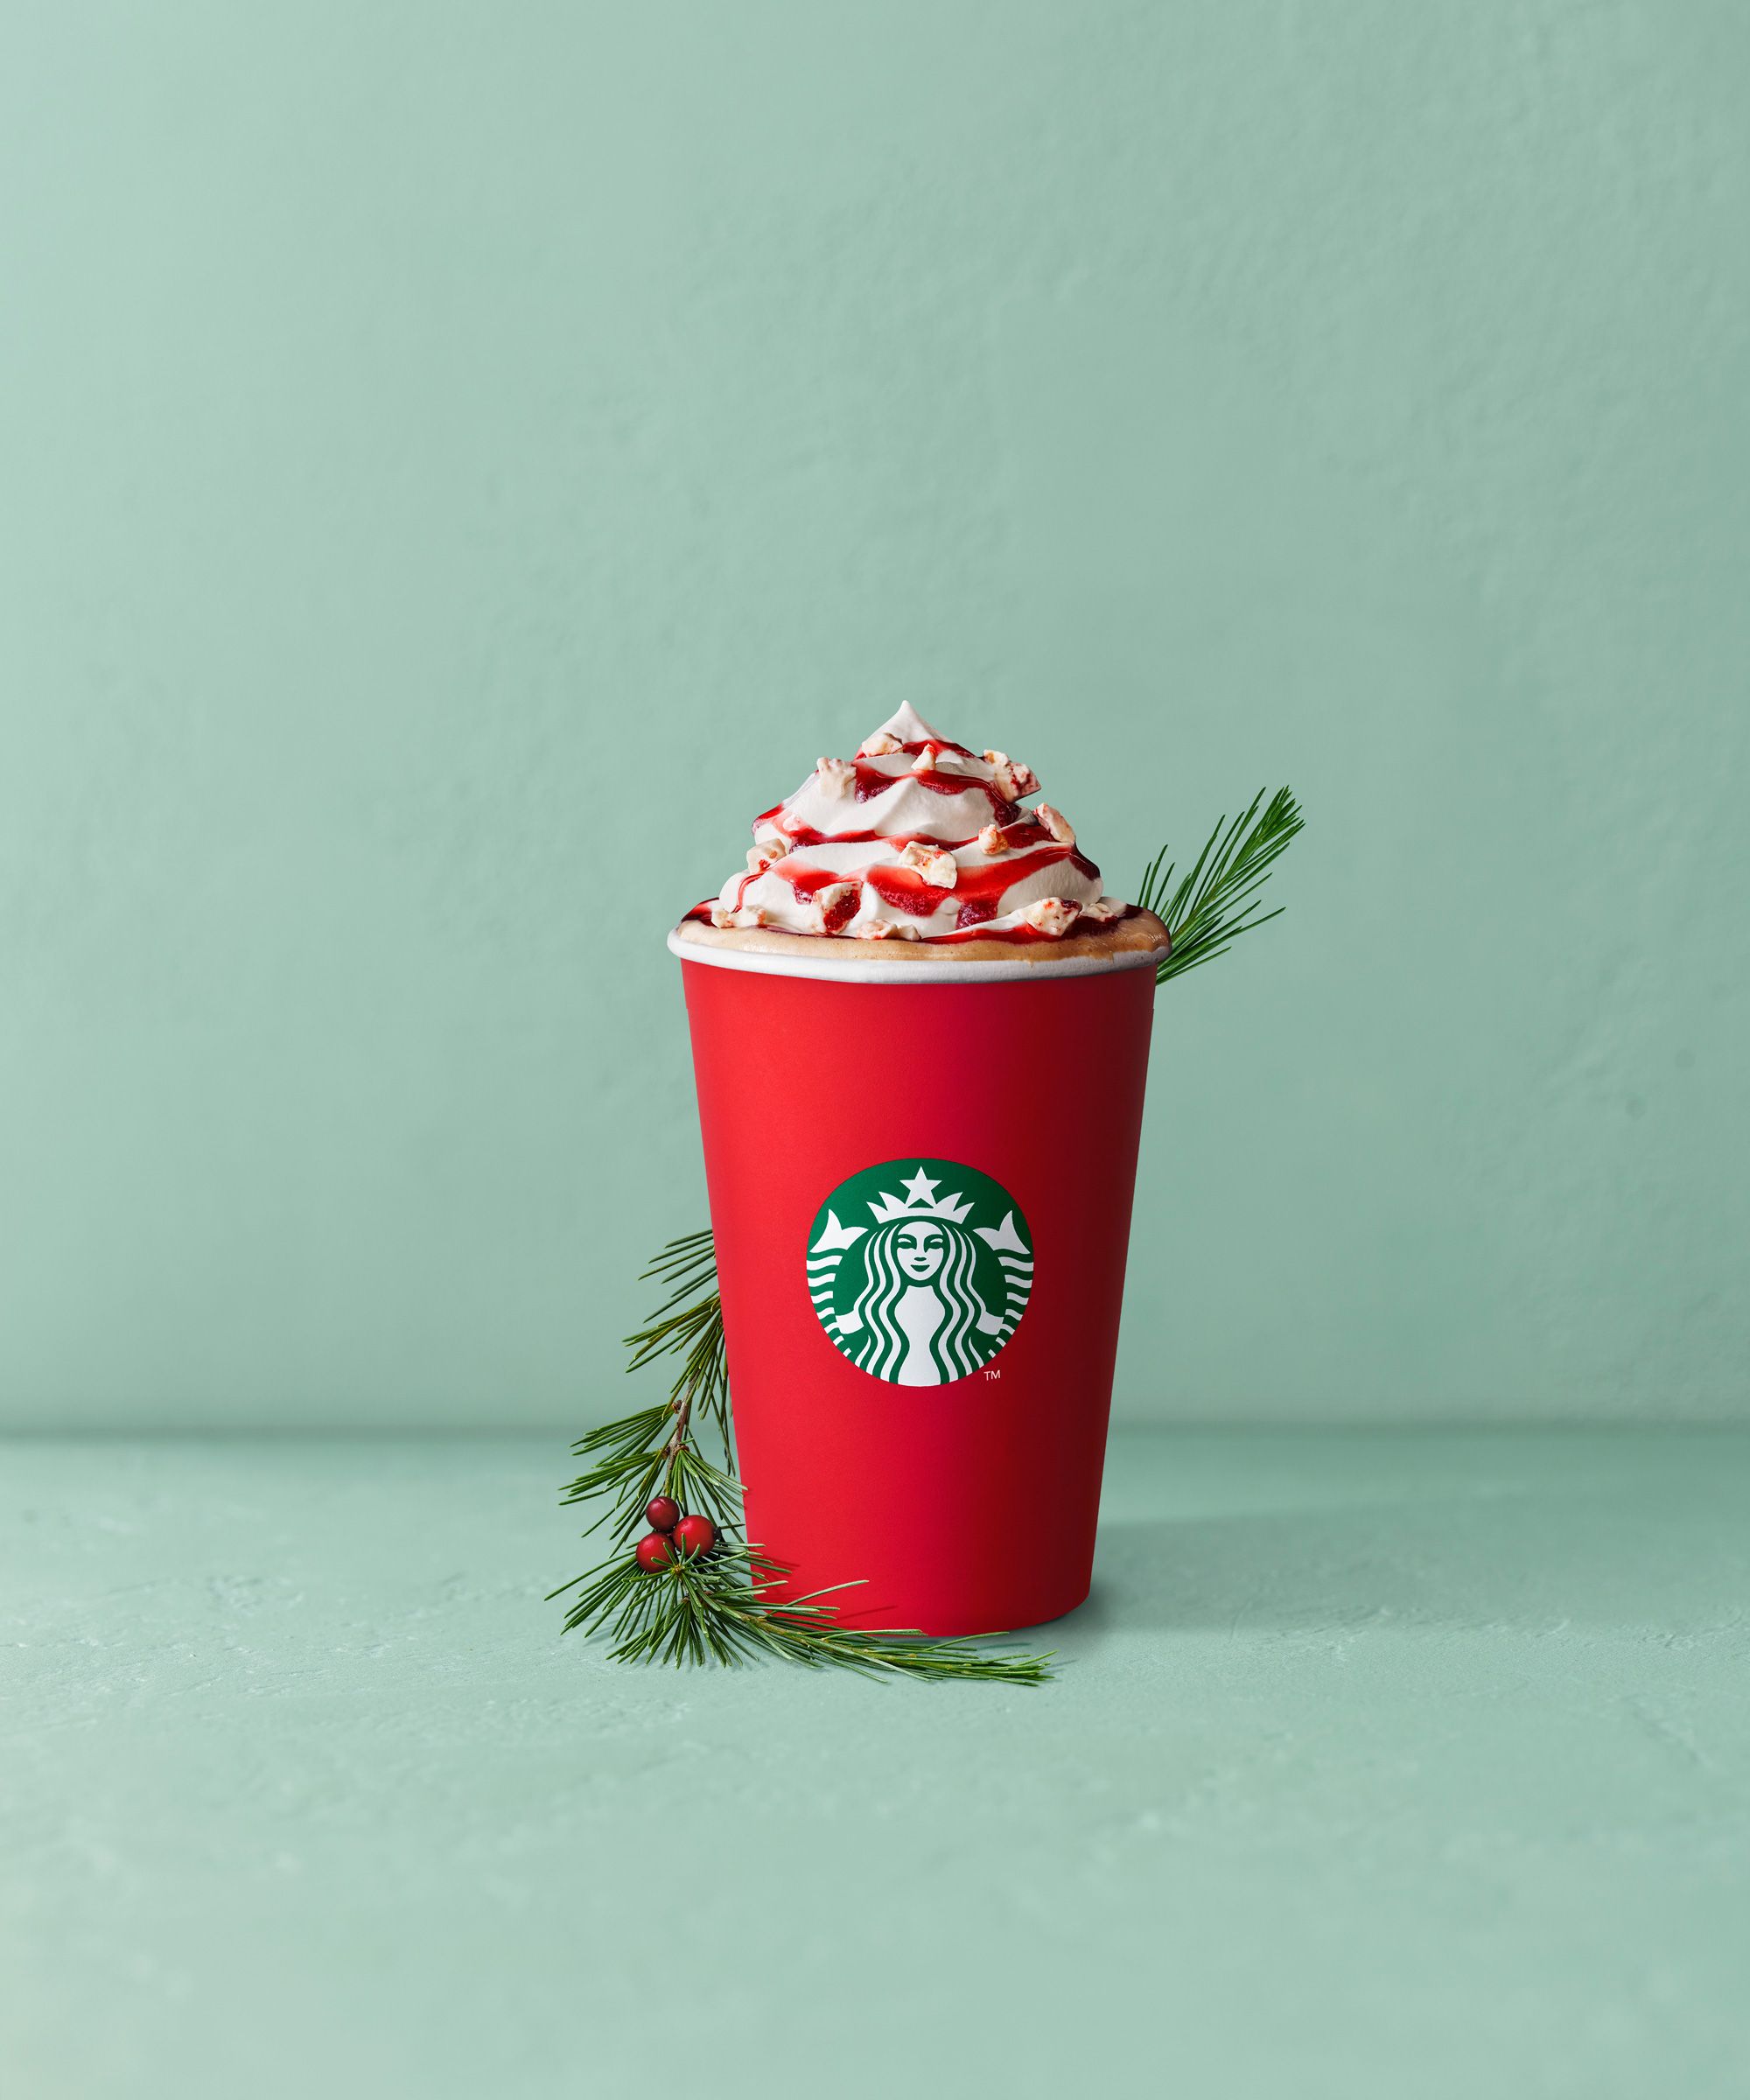 starbucks has festive new drinks worldwide this holiday season